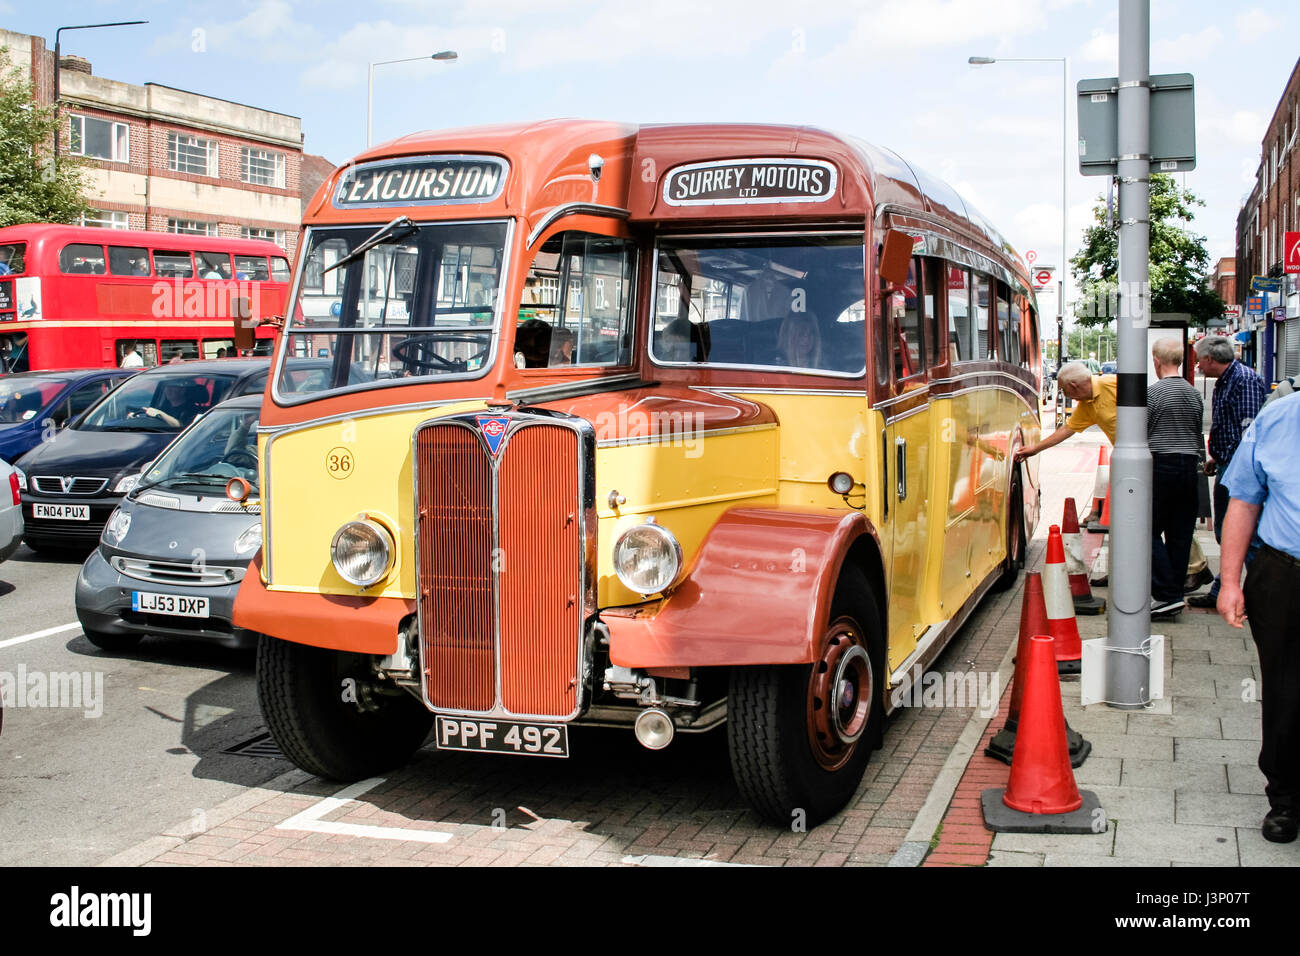 1951 AEC Regal lll half cab omnibus, la PPF 492 en Surrey Motors livery, North Cheam, Greater London, 2008 Foto de stock